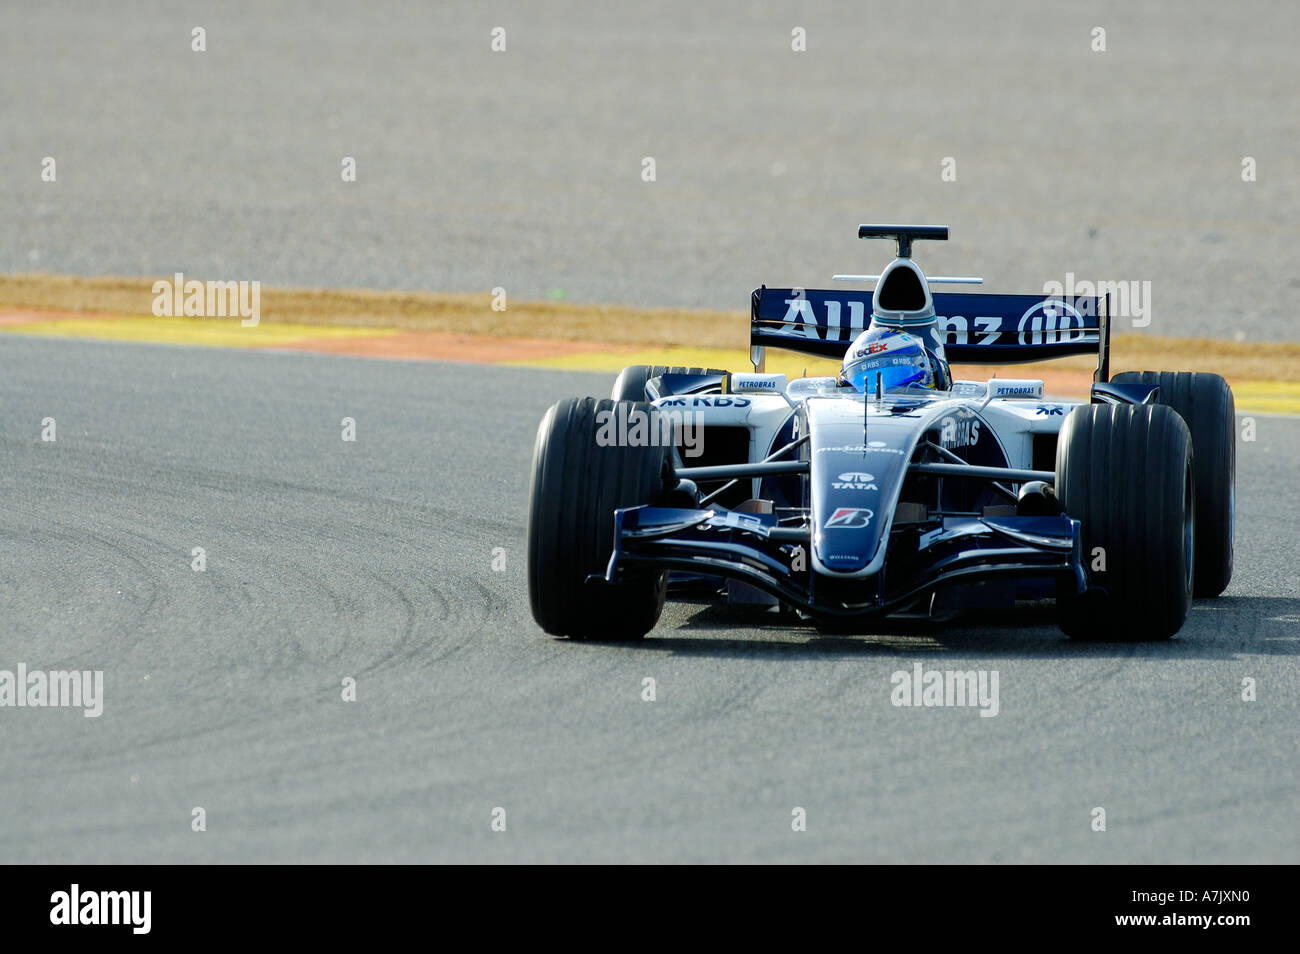 Nico Rosberg races his Williams Formula One racecar around the track at ...